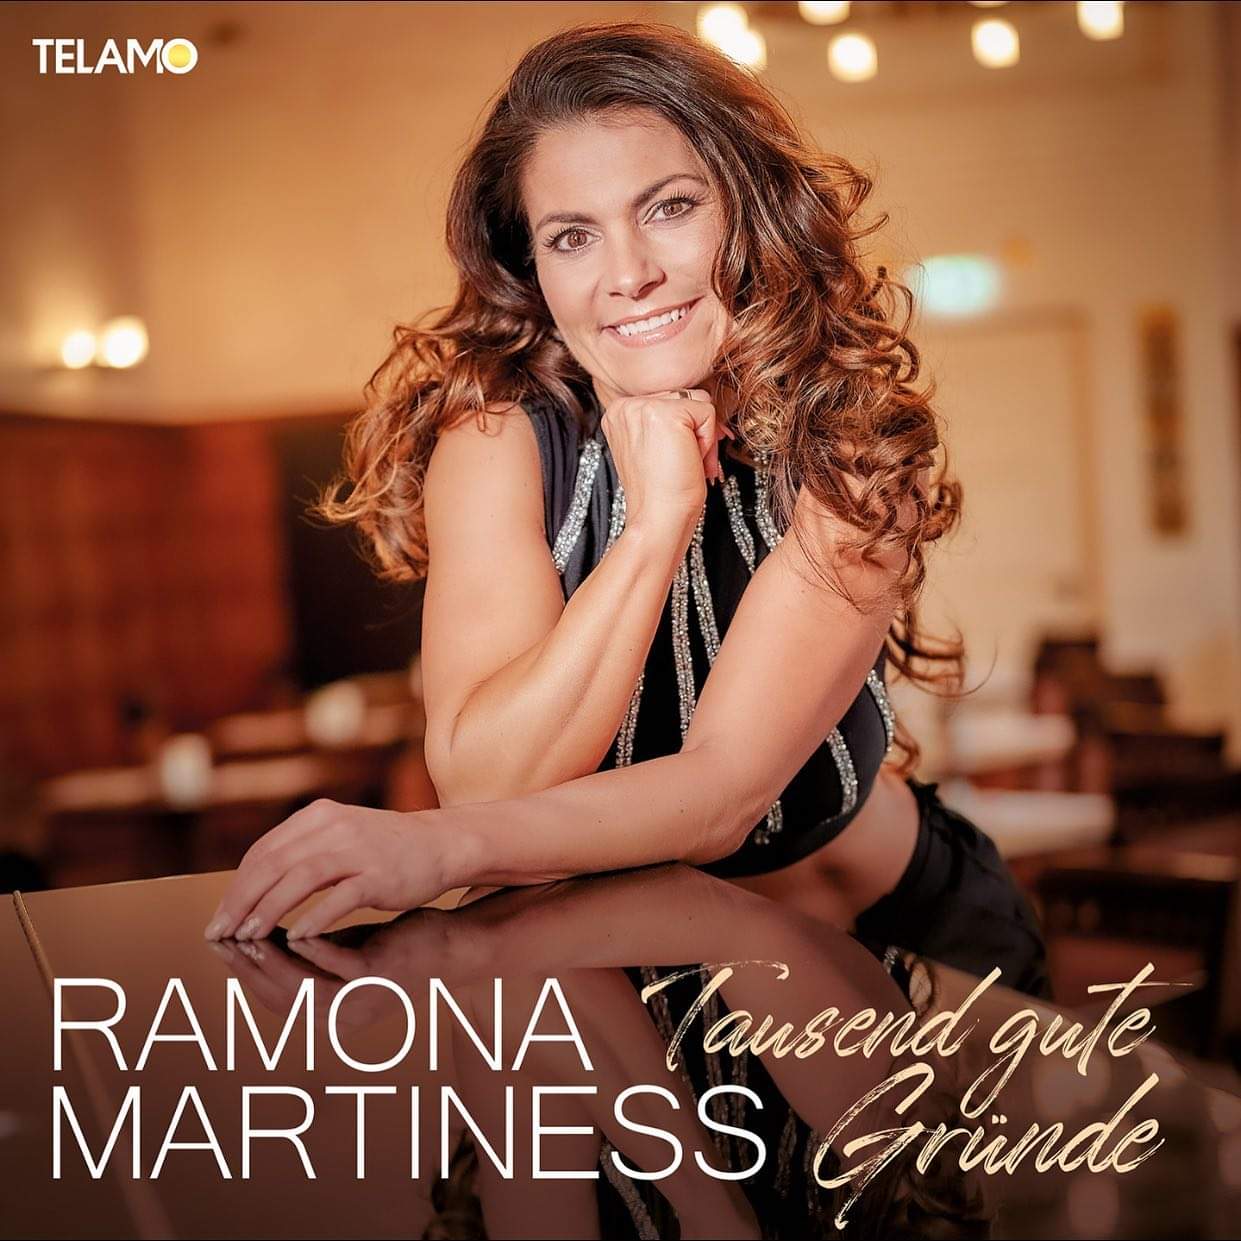 Ramona Martiness - Tausend gute Gründe (2021) 